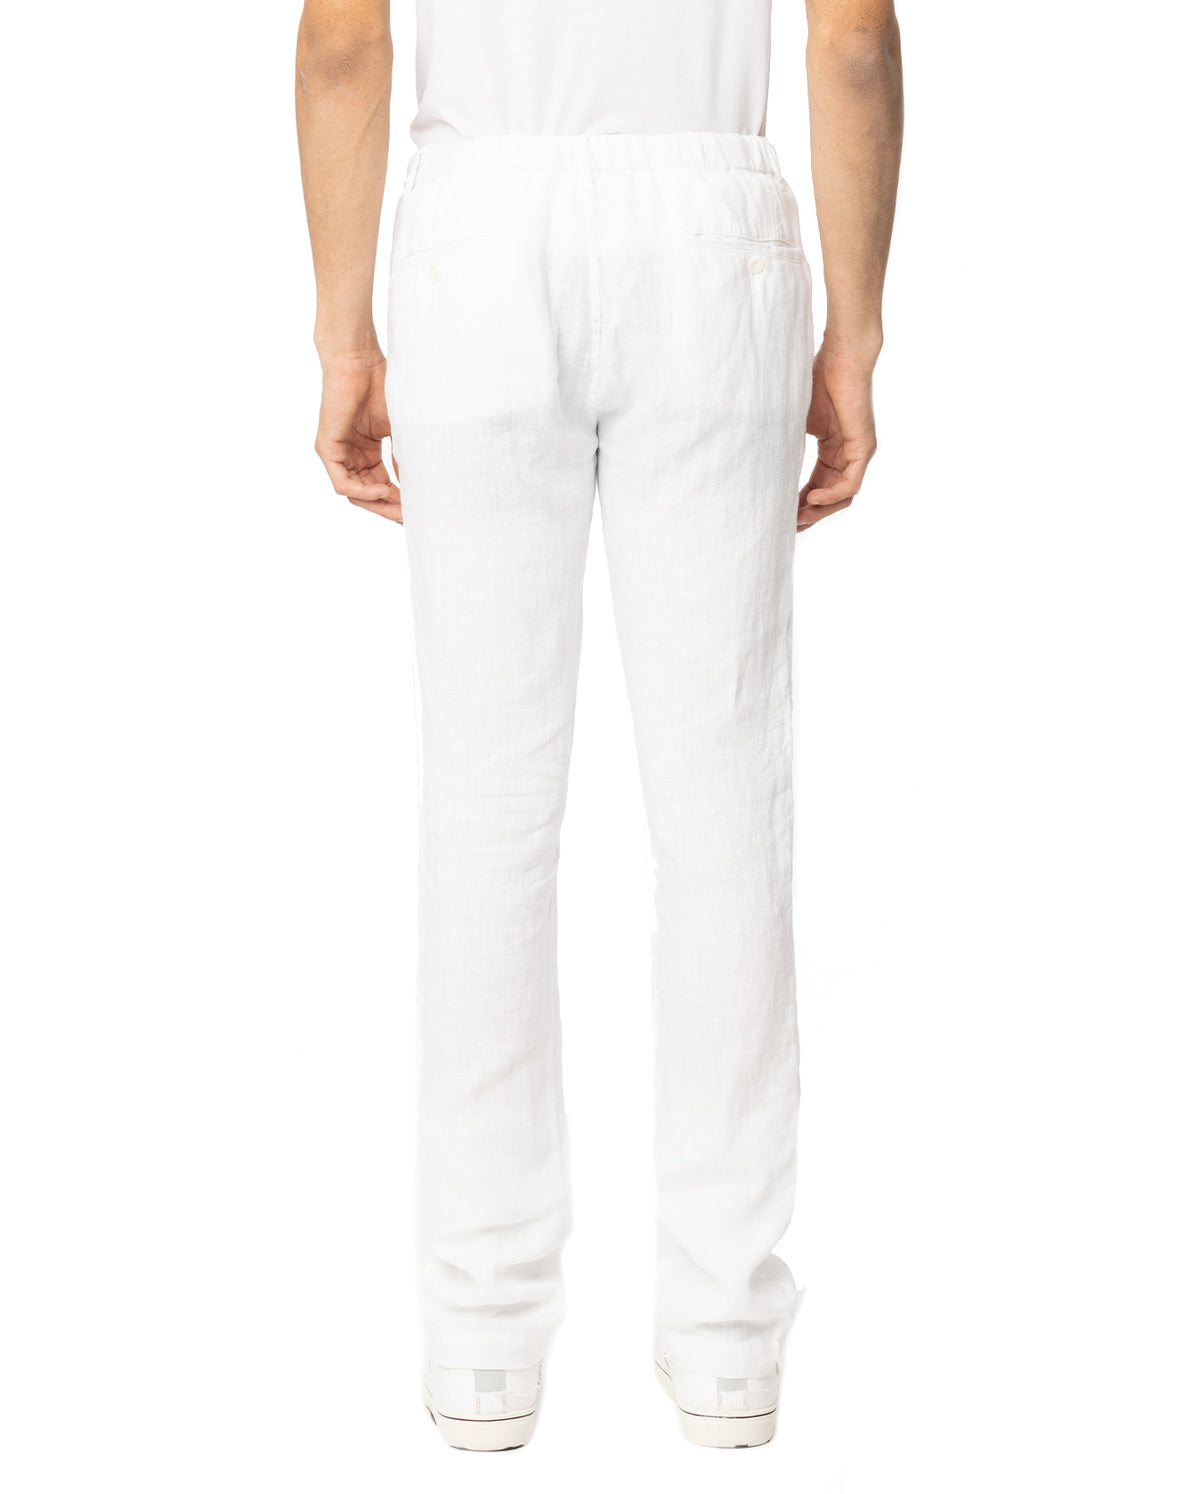 Tanker Drawstring Linen Pants - White